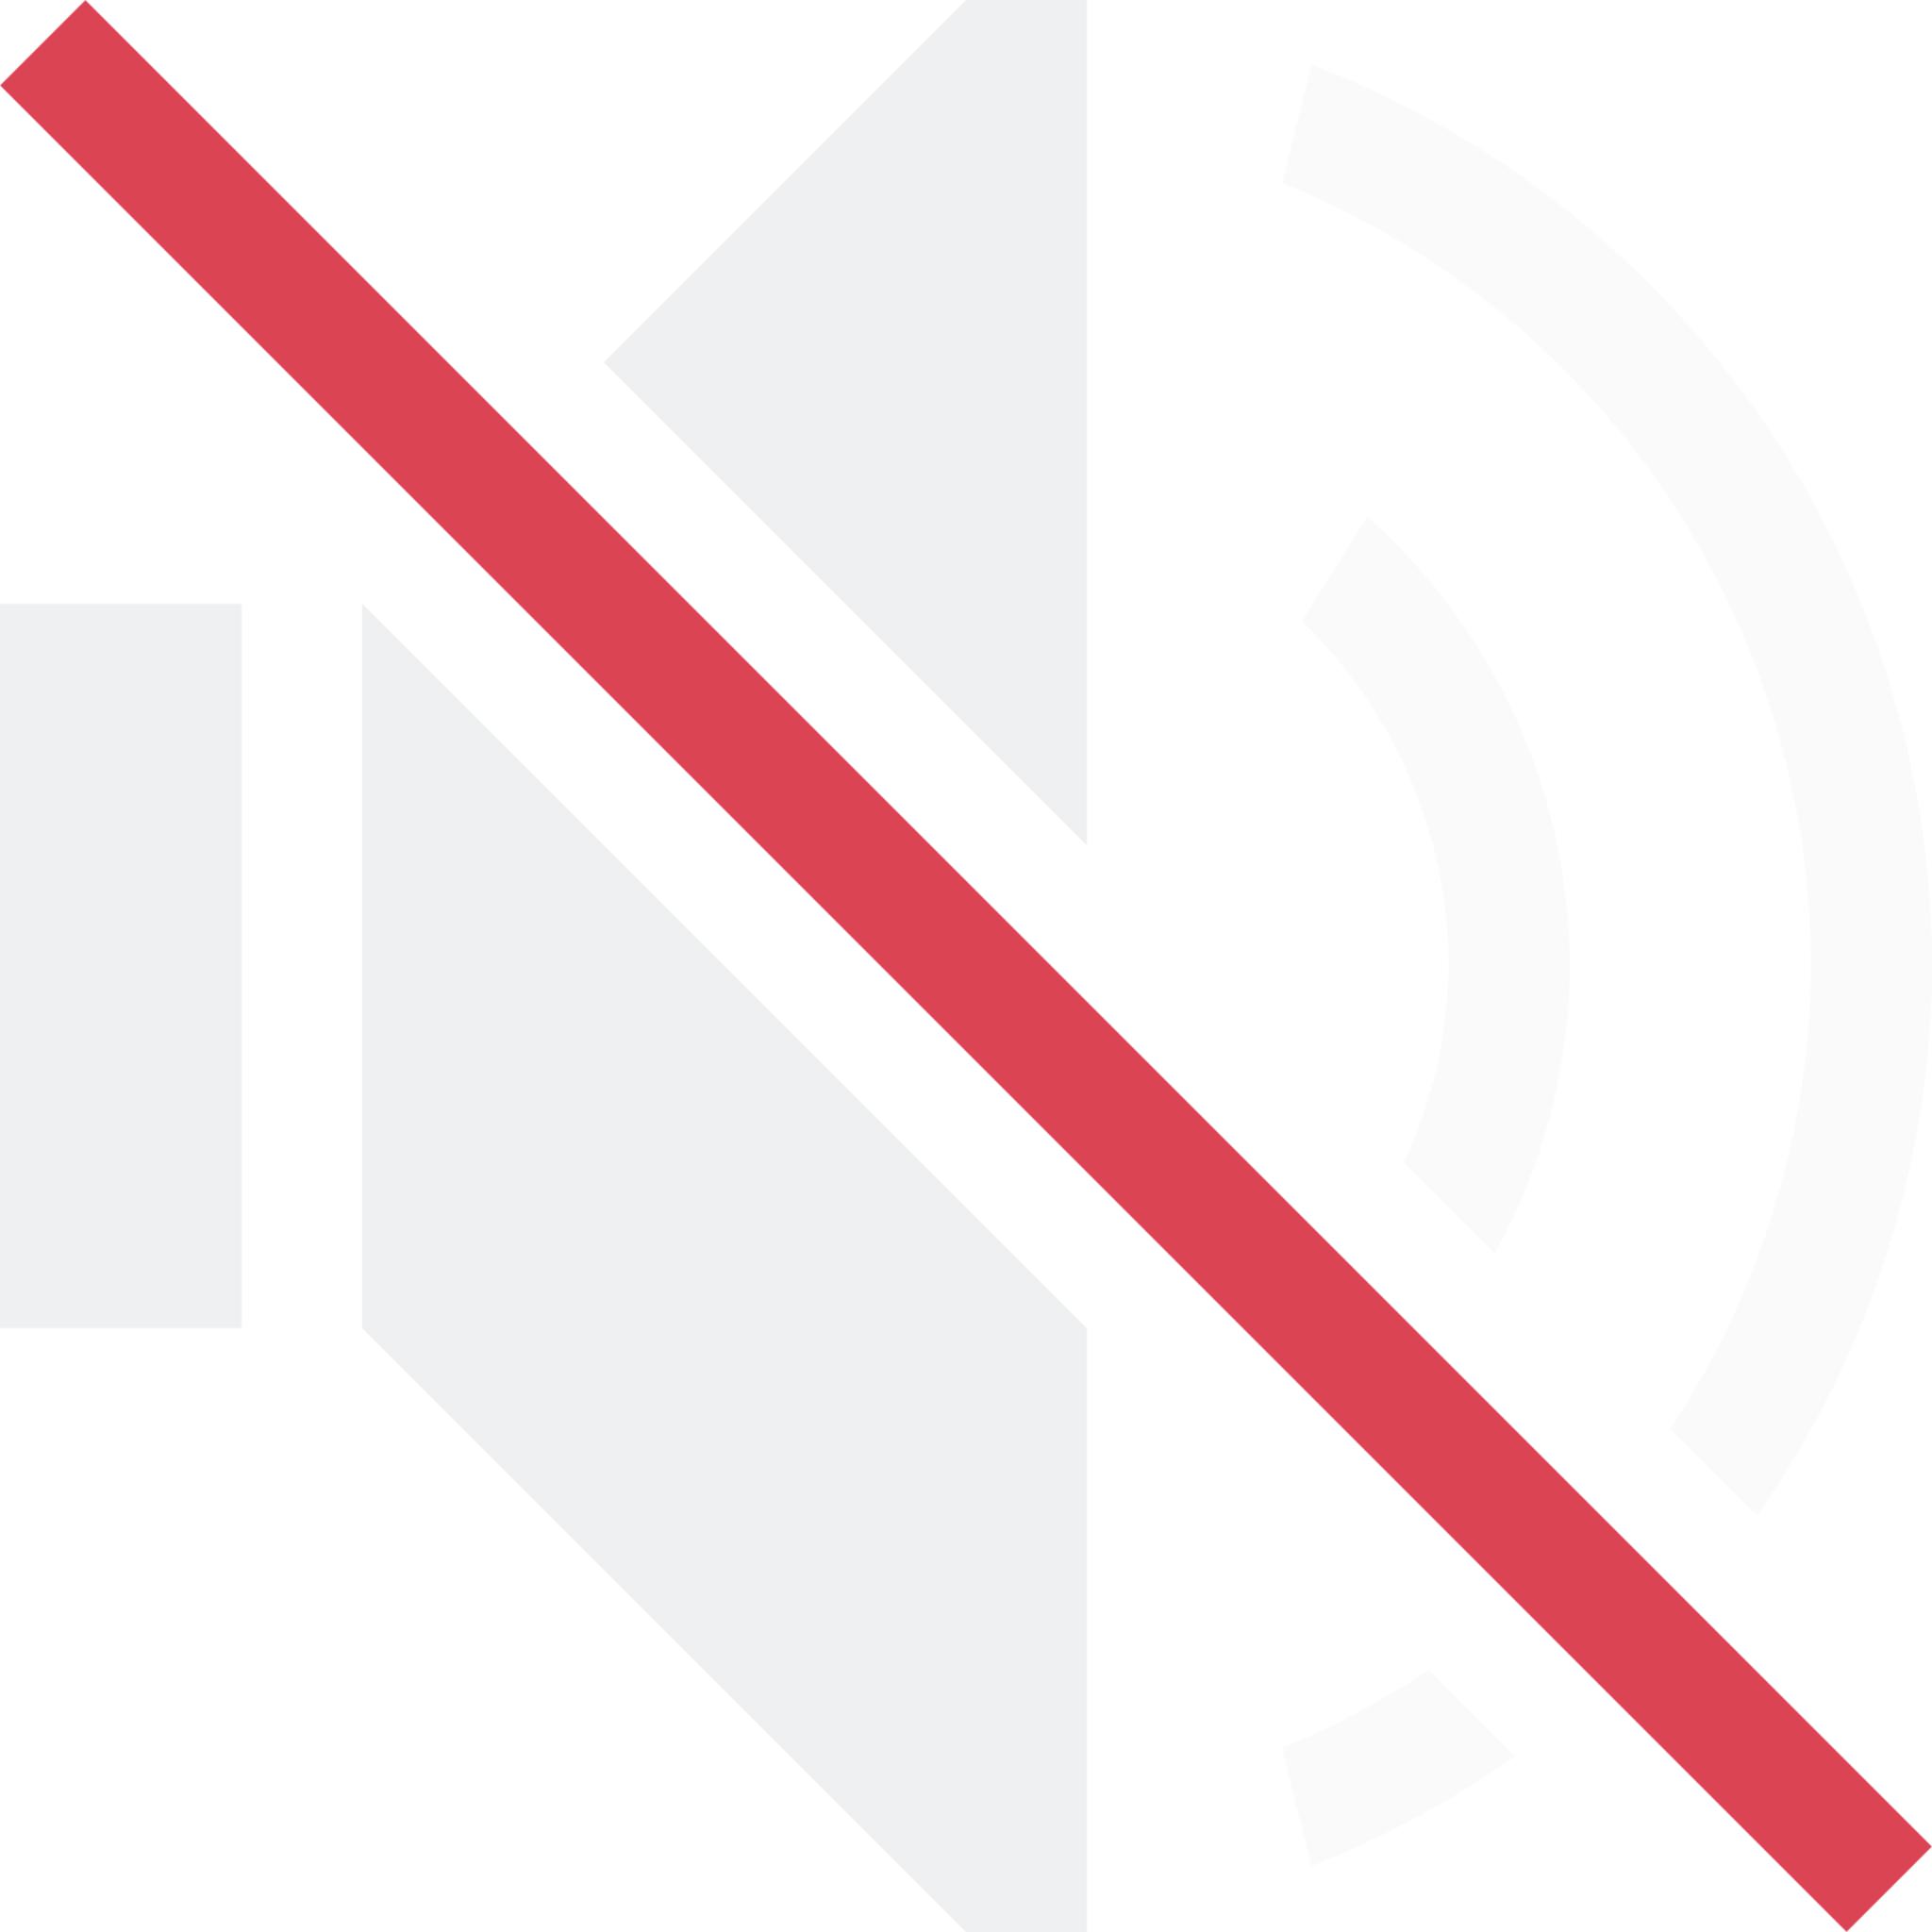 audio volume muted icon